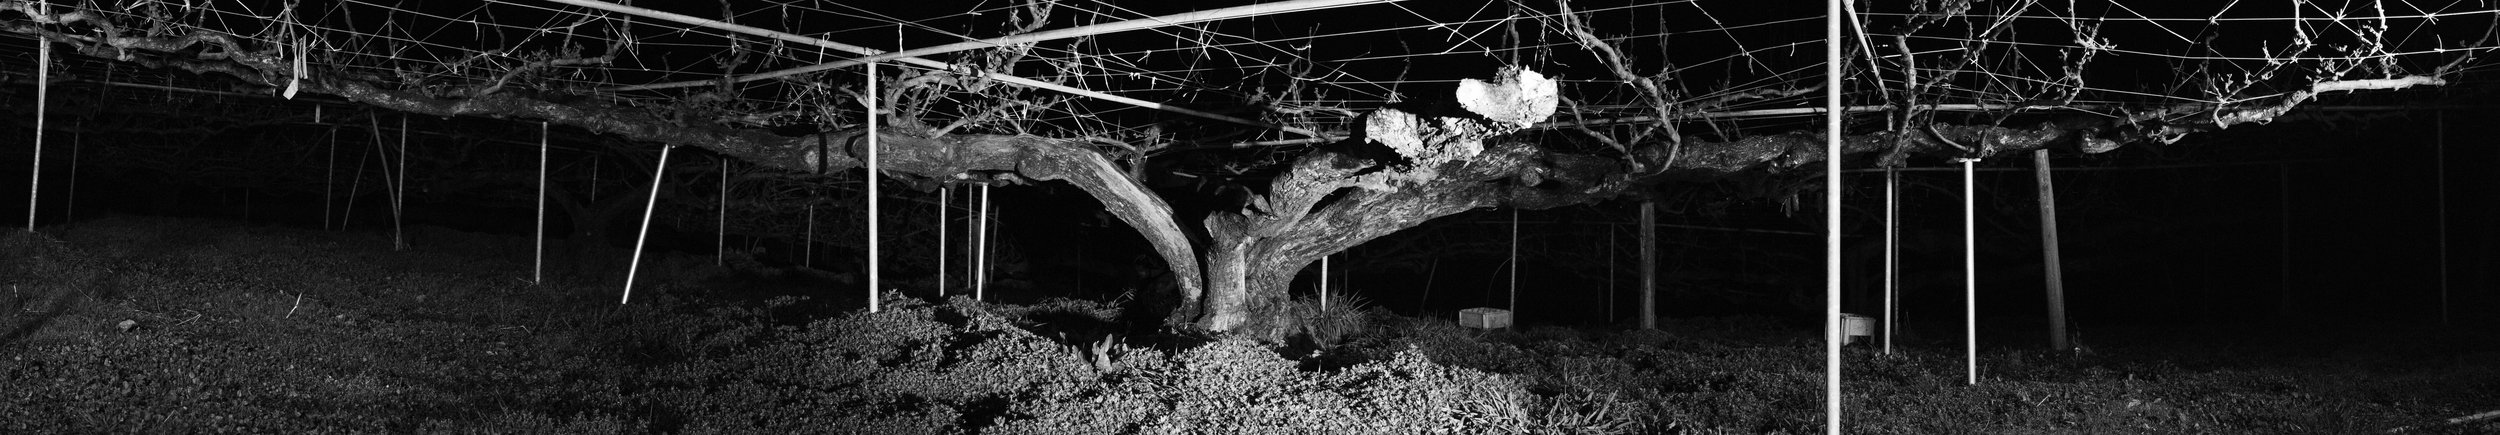  &lt;百年梨樹&gt; A Hundred Year Pear Tree.  噴墨印刷/描圖紙/地燈/煙霧  Inkjet Print / Tracing Paper/Floor Light/ Fog 